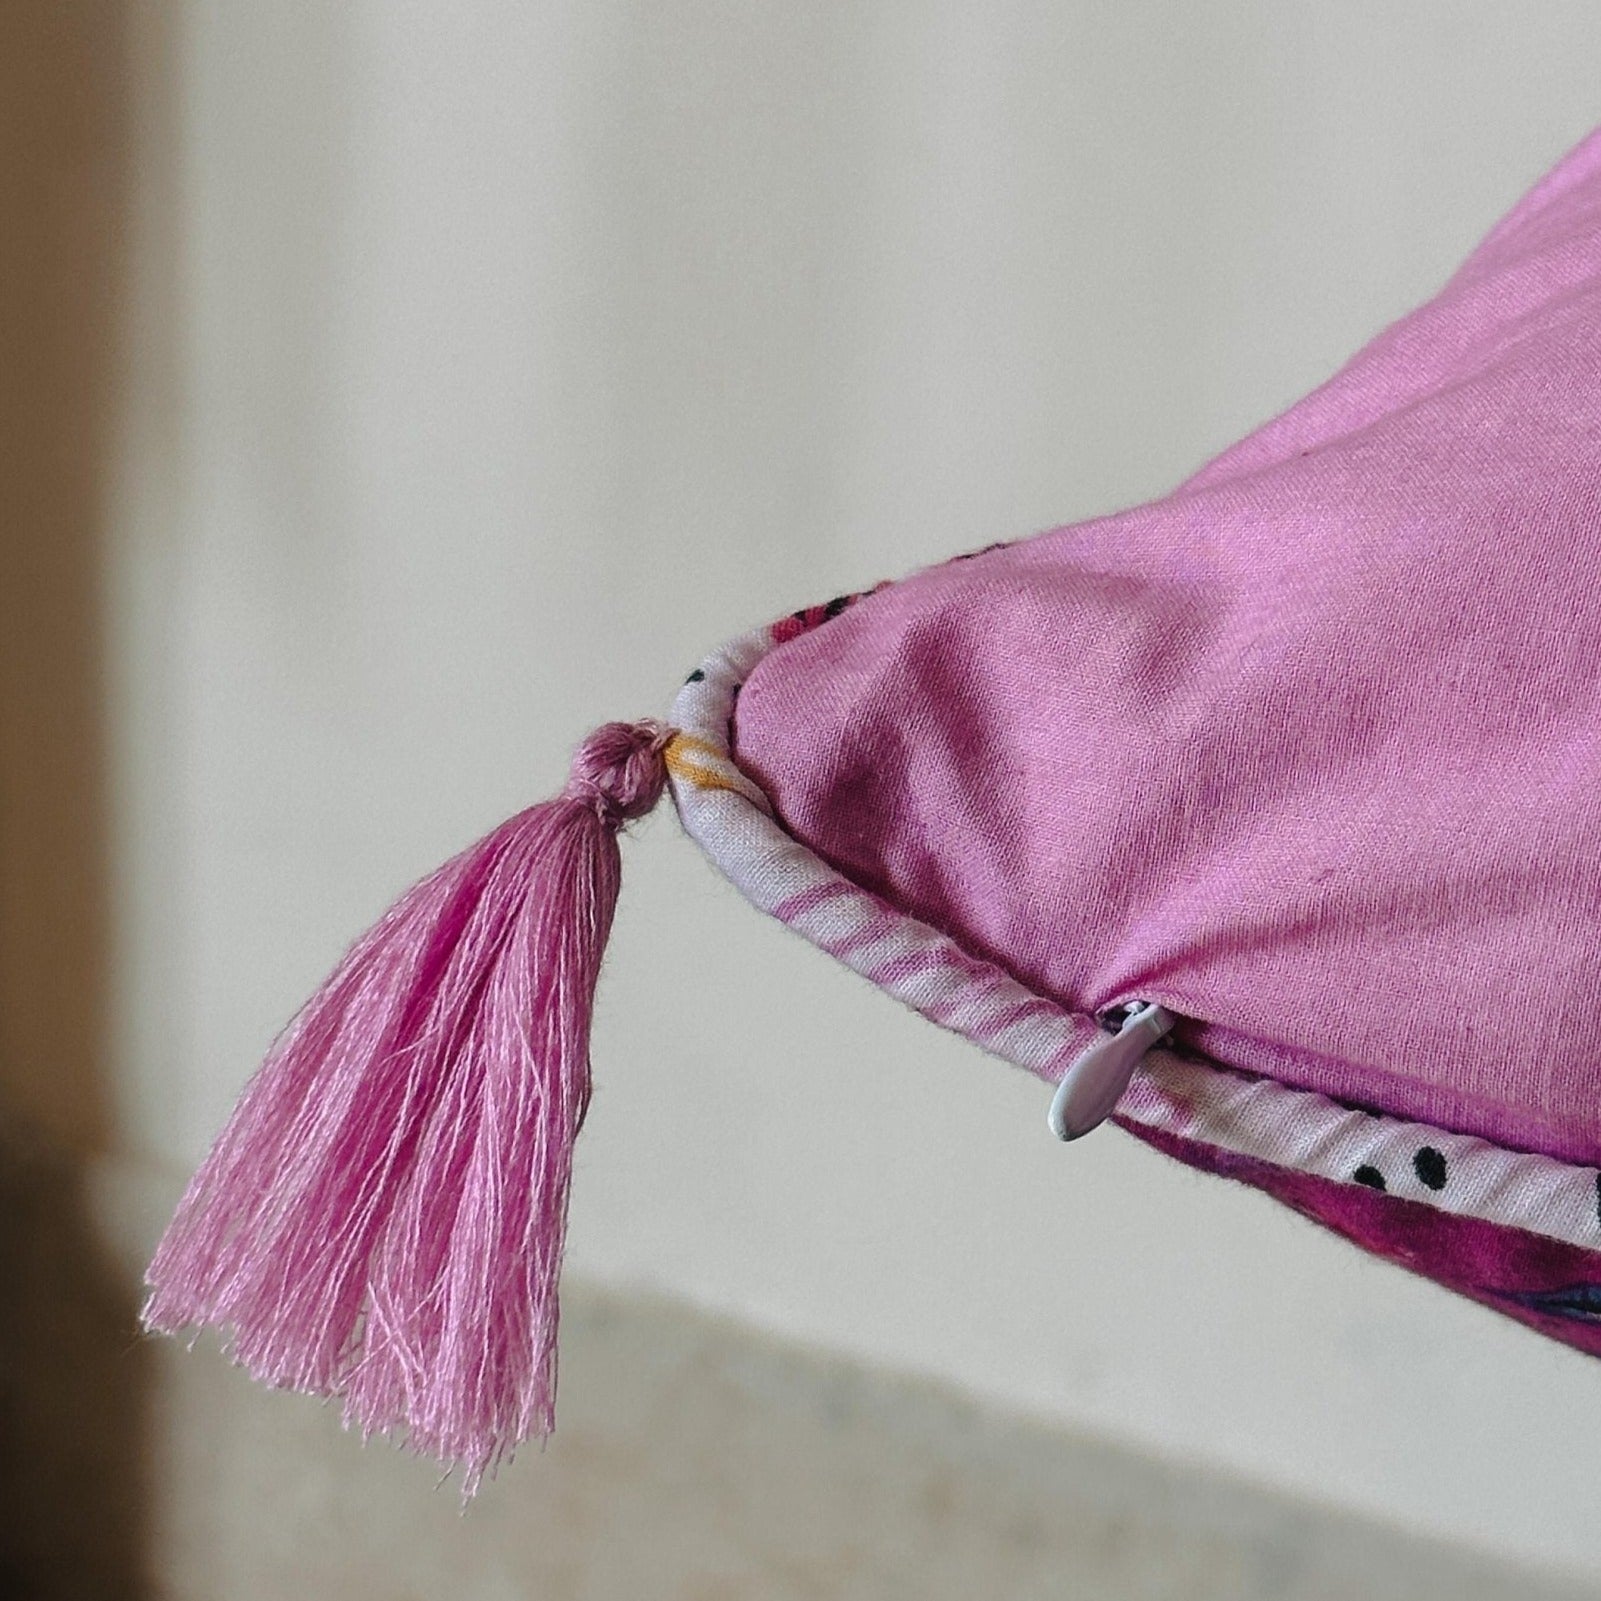 Purple Flower Trail Handblockprinted Lumbar Cushion Cover - Nurture India